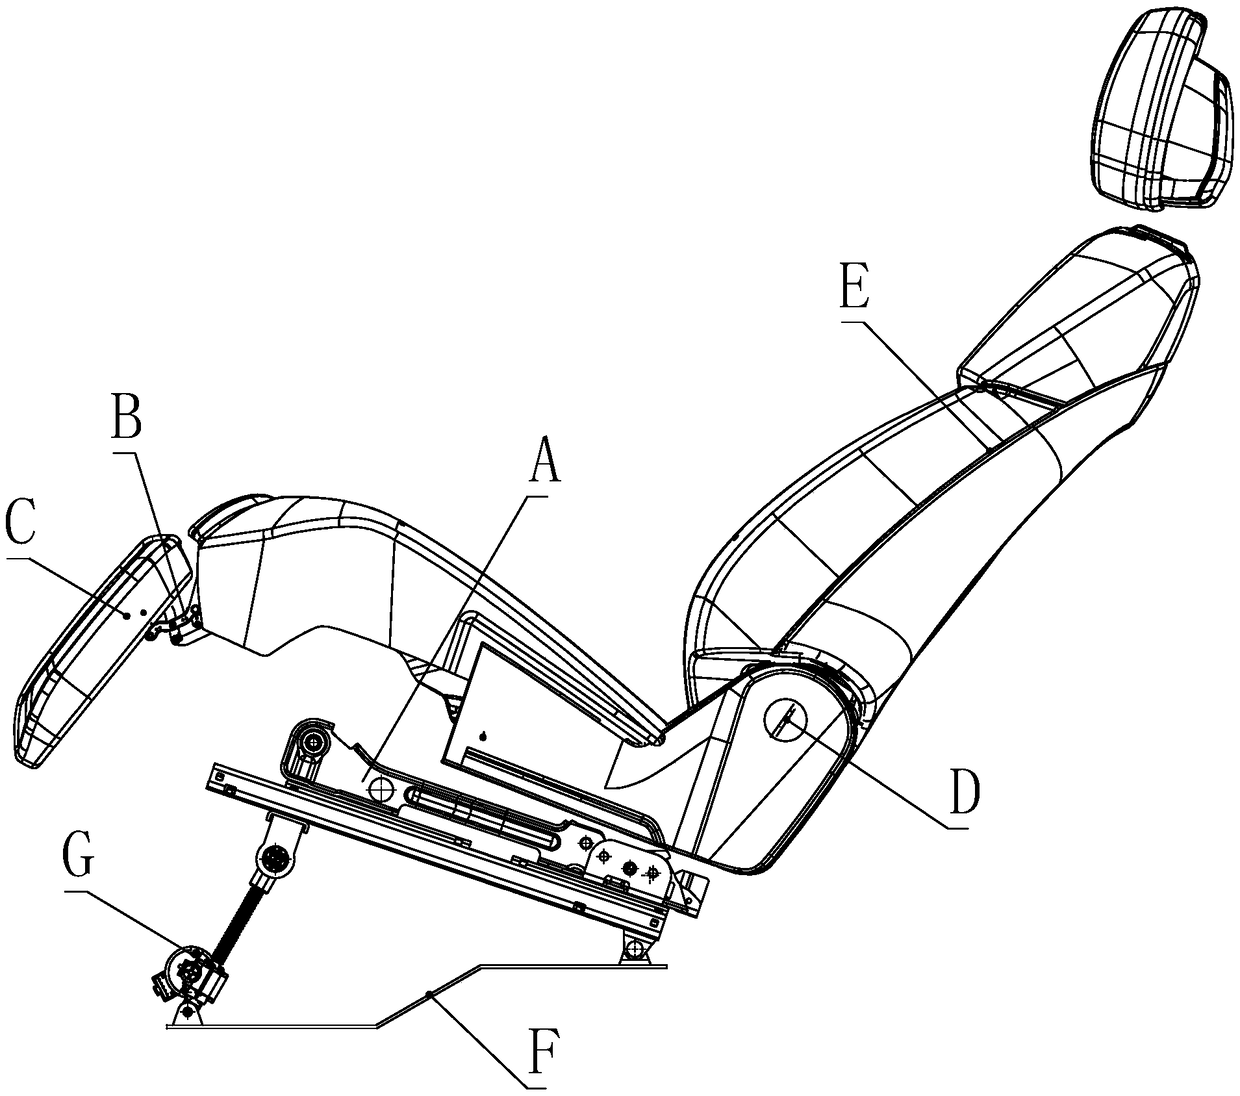 Zero-gravity automobile seat